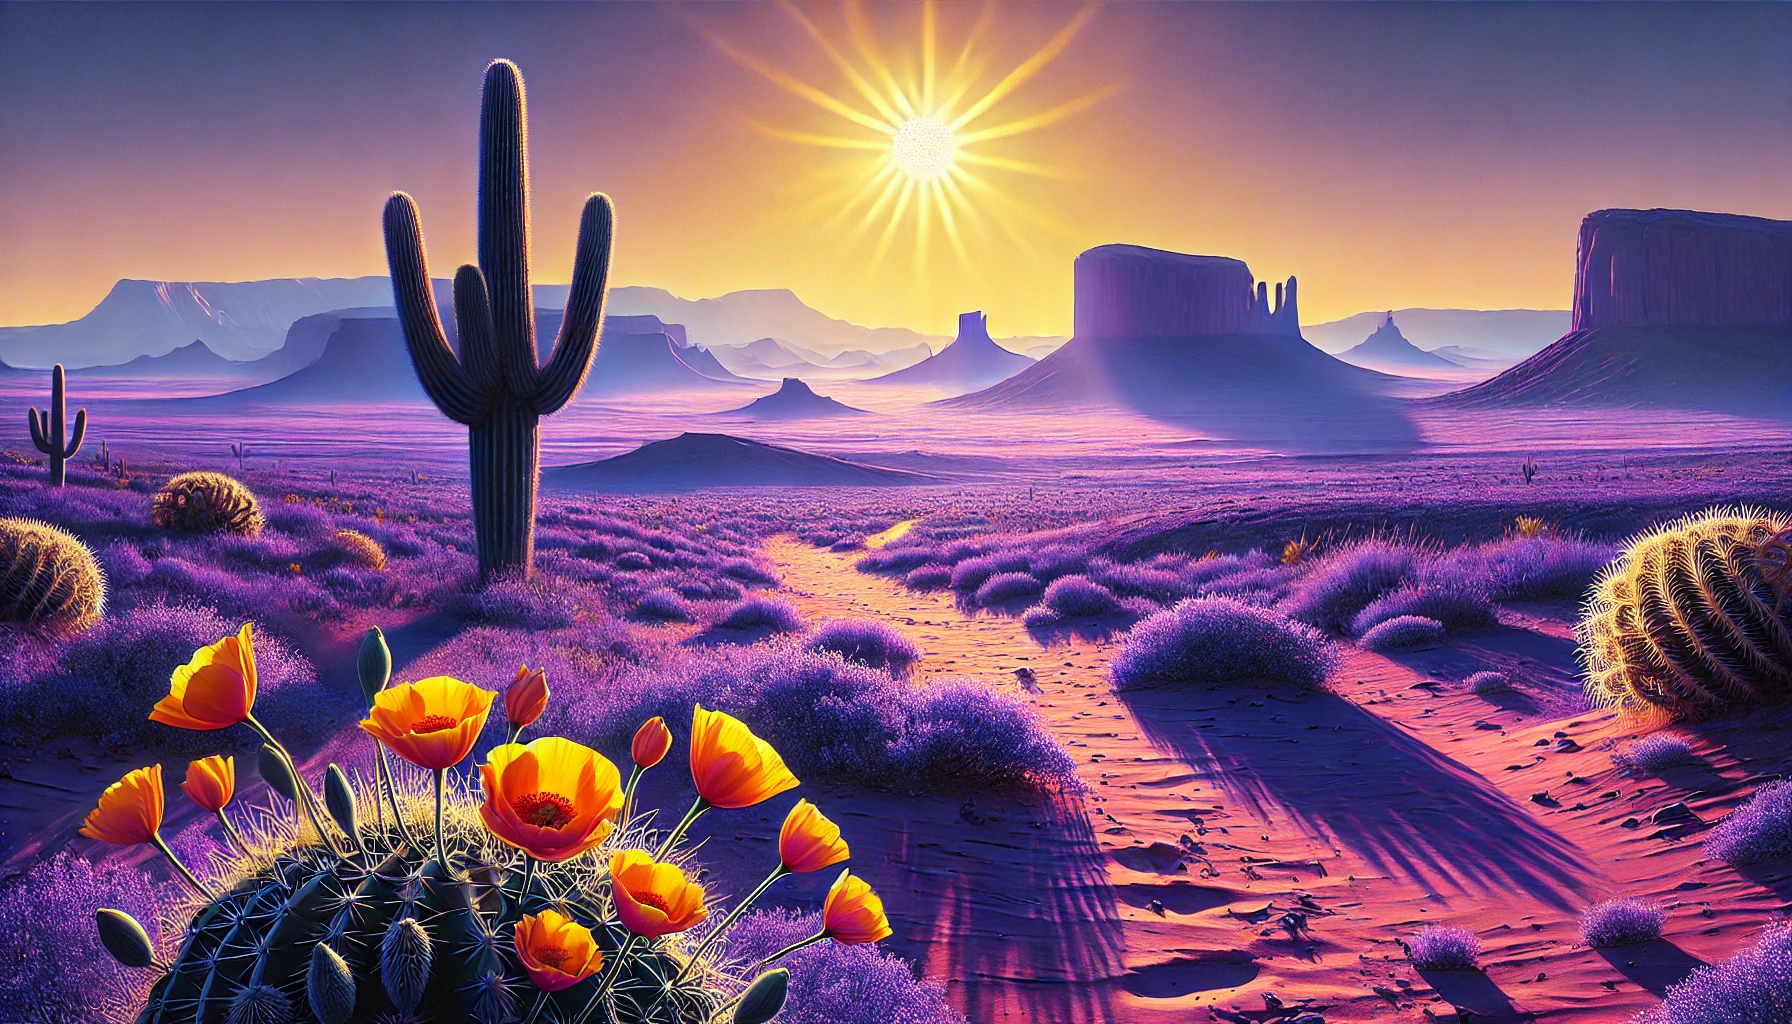 In the Arizona Desert by C.S. Wortley Az poetry.com